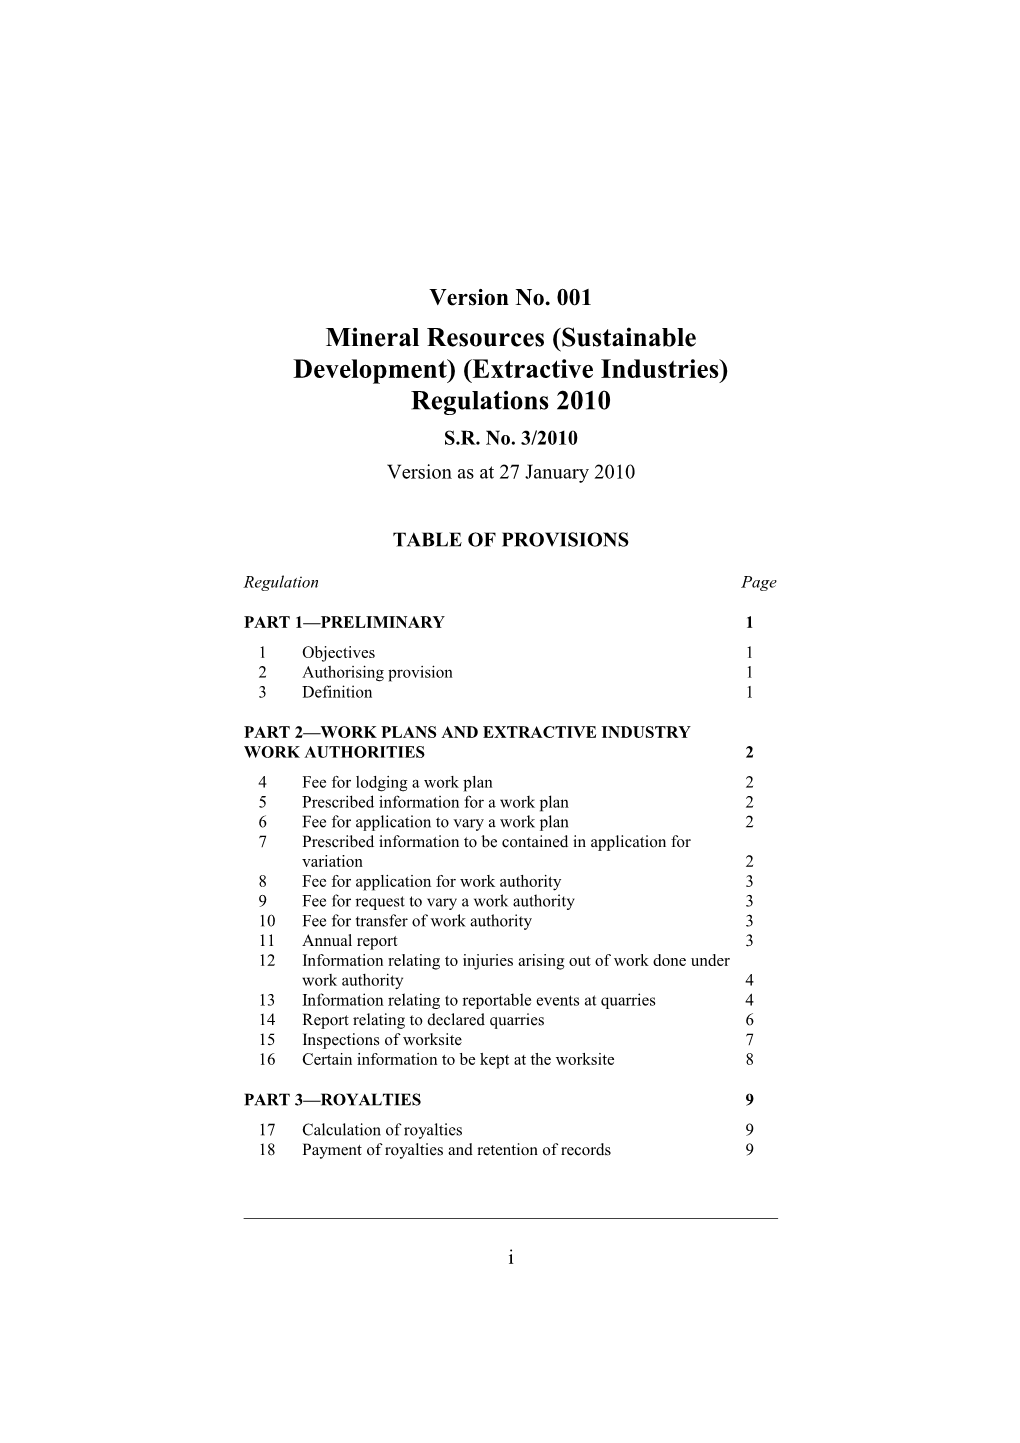 Mineral Resources (Sustainable Development) (Extractive Industries) Regulations 2010